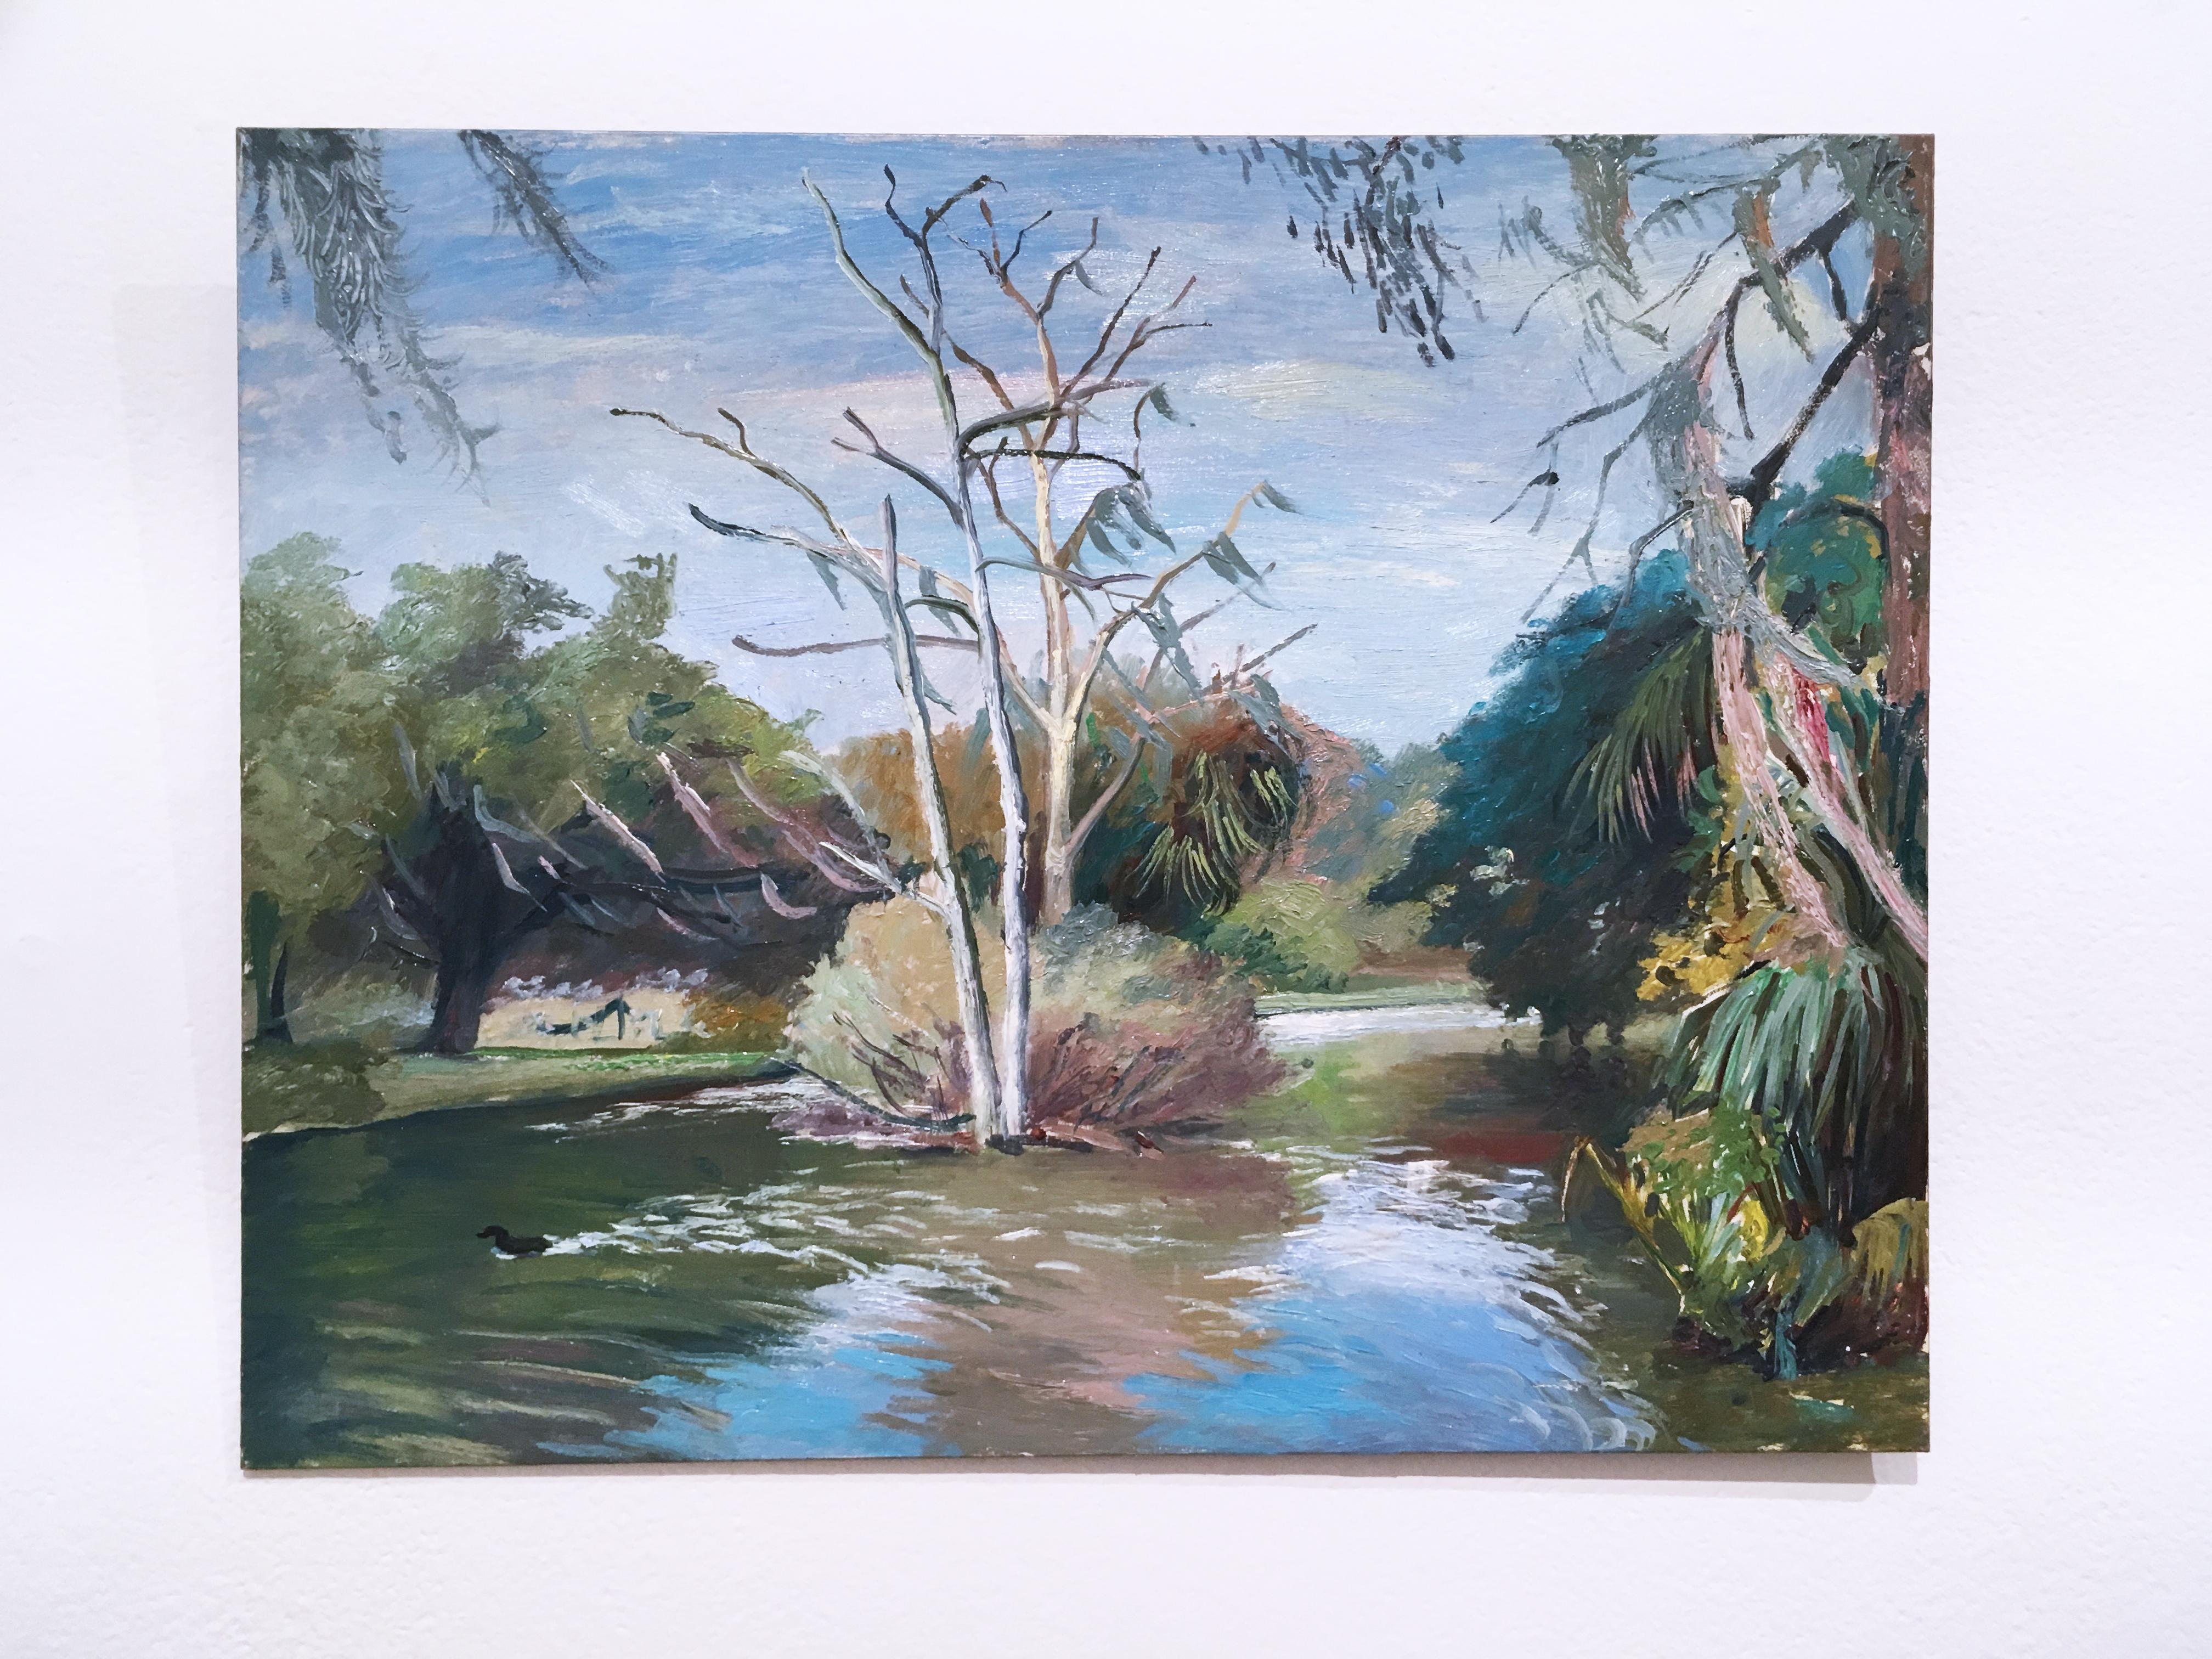 NOLA Swamp, plein air figurative, landscape, oil on panel, 2016